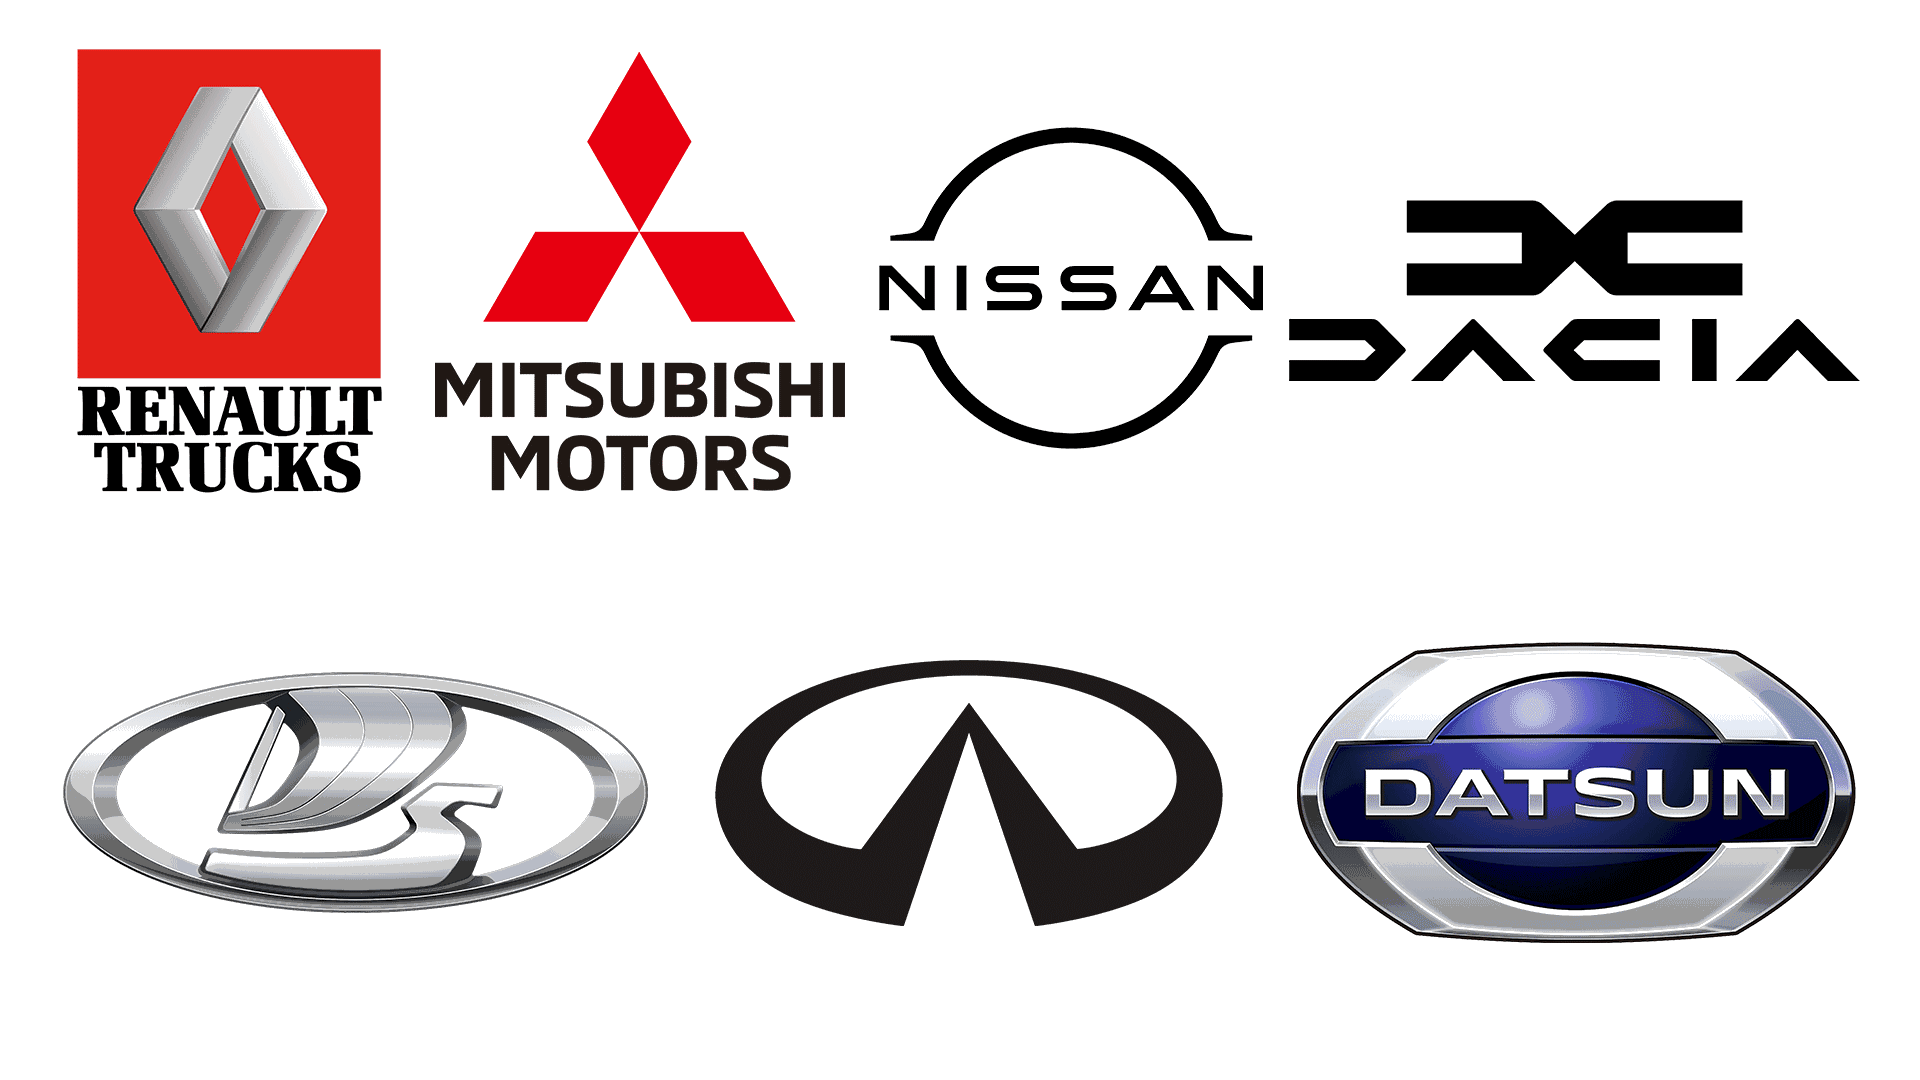 Renault-Nissan-Mitsubishi-alliance